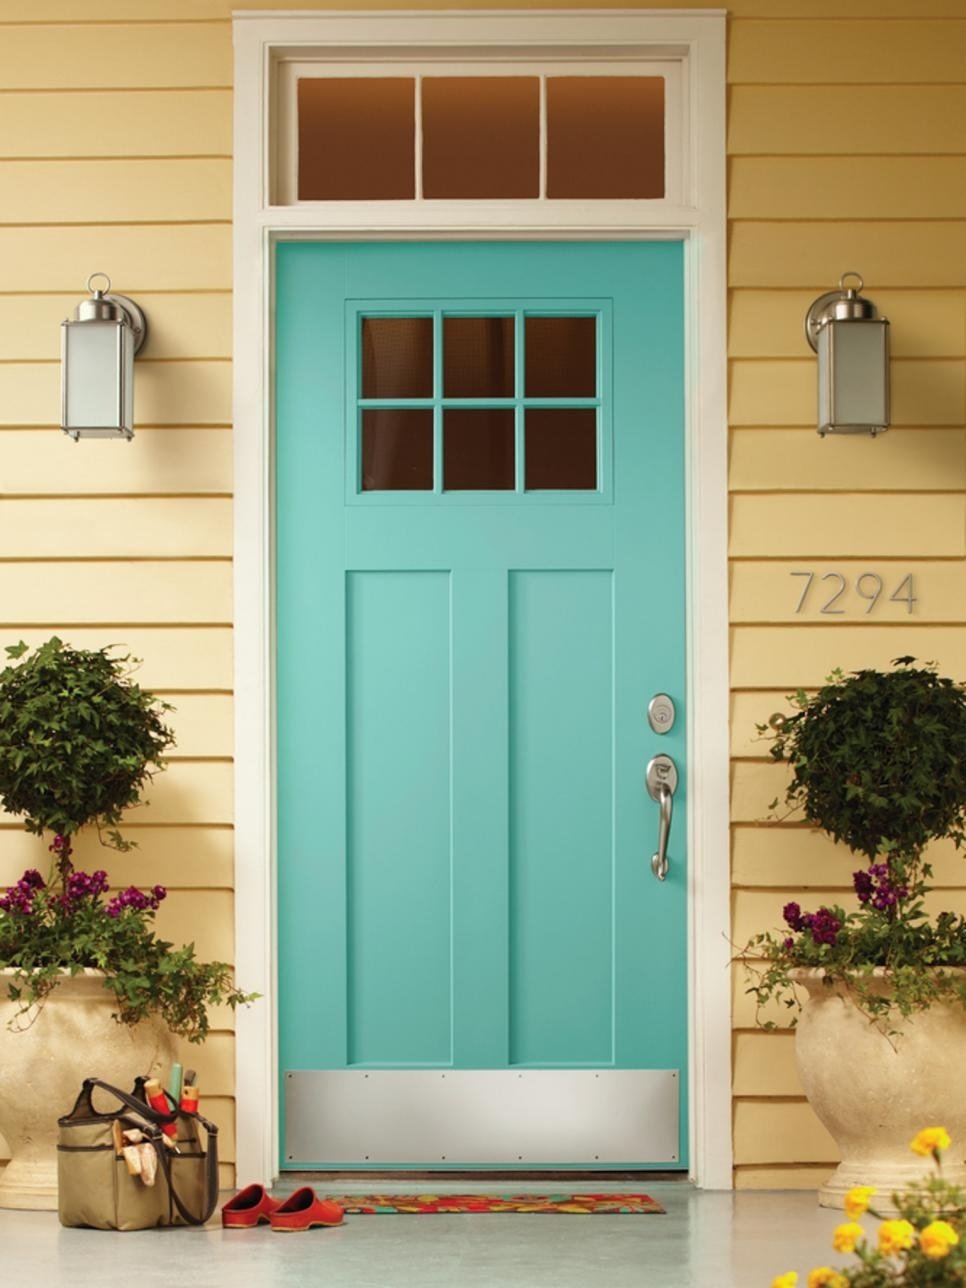 10 Best Front Door Paint Color Ideas front door paint colors in wonderful home decor ideas p70 with front 2022